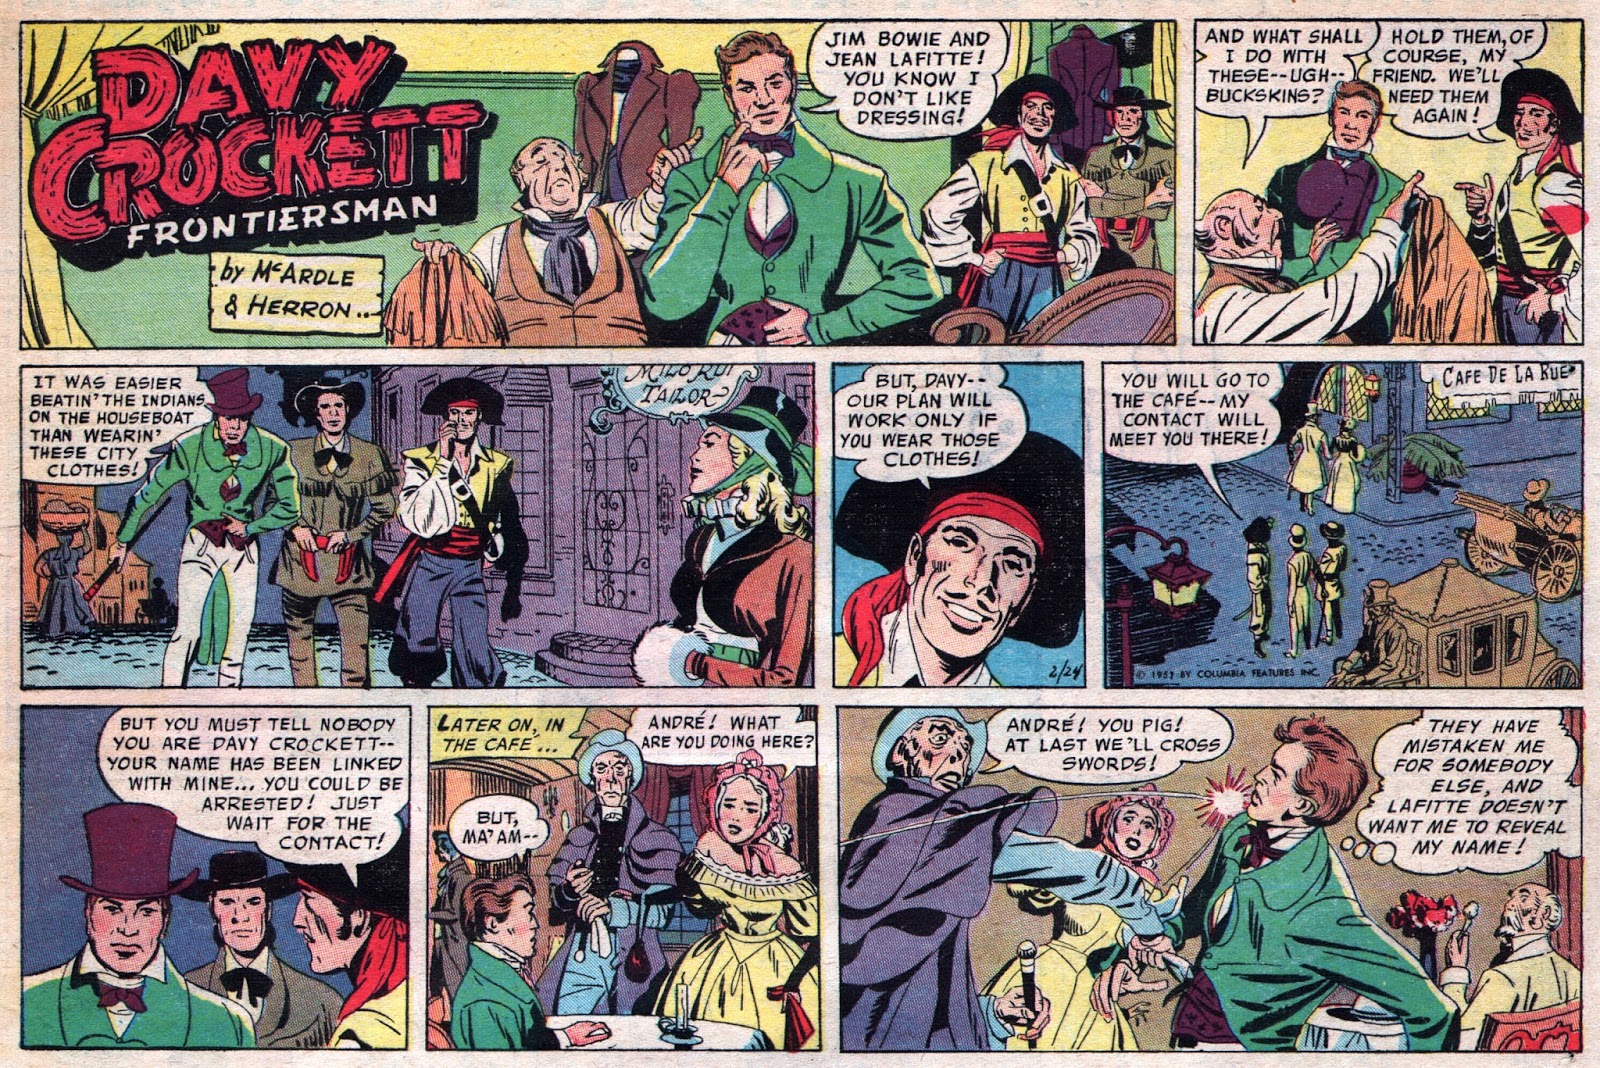 24 February 1957 Davy Crockett, Frontiersman Sunday strip